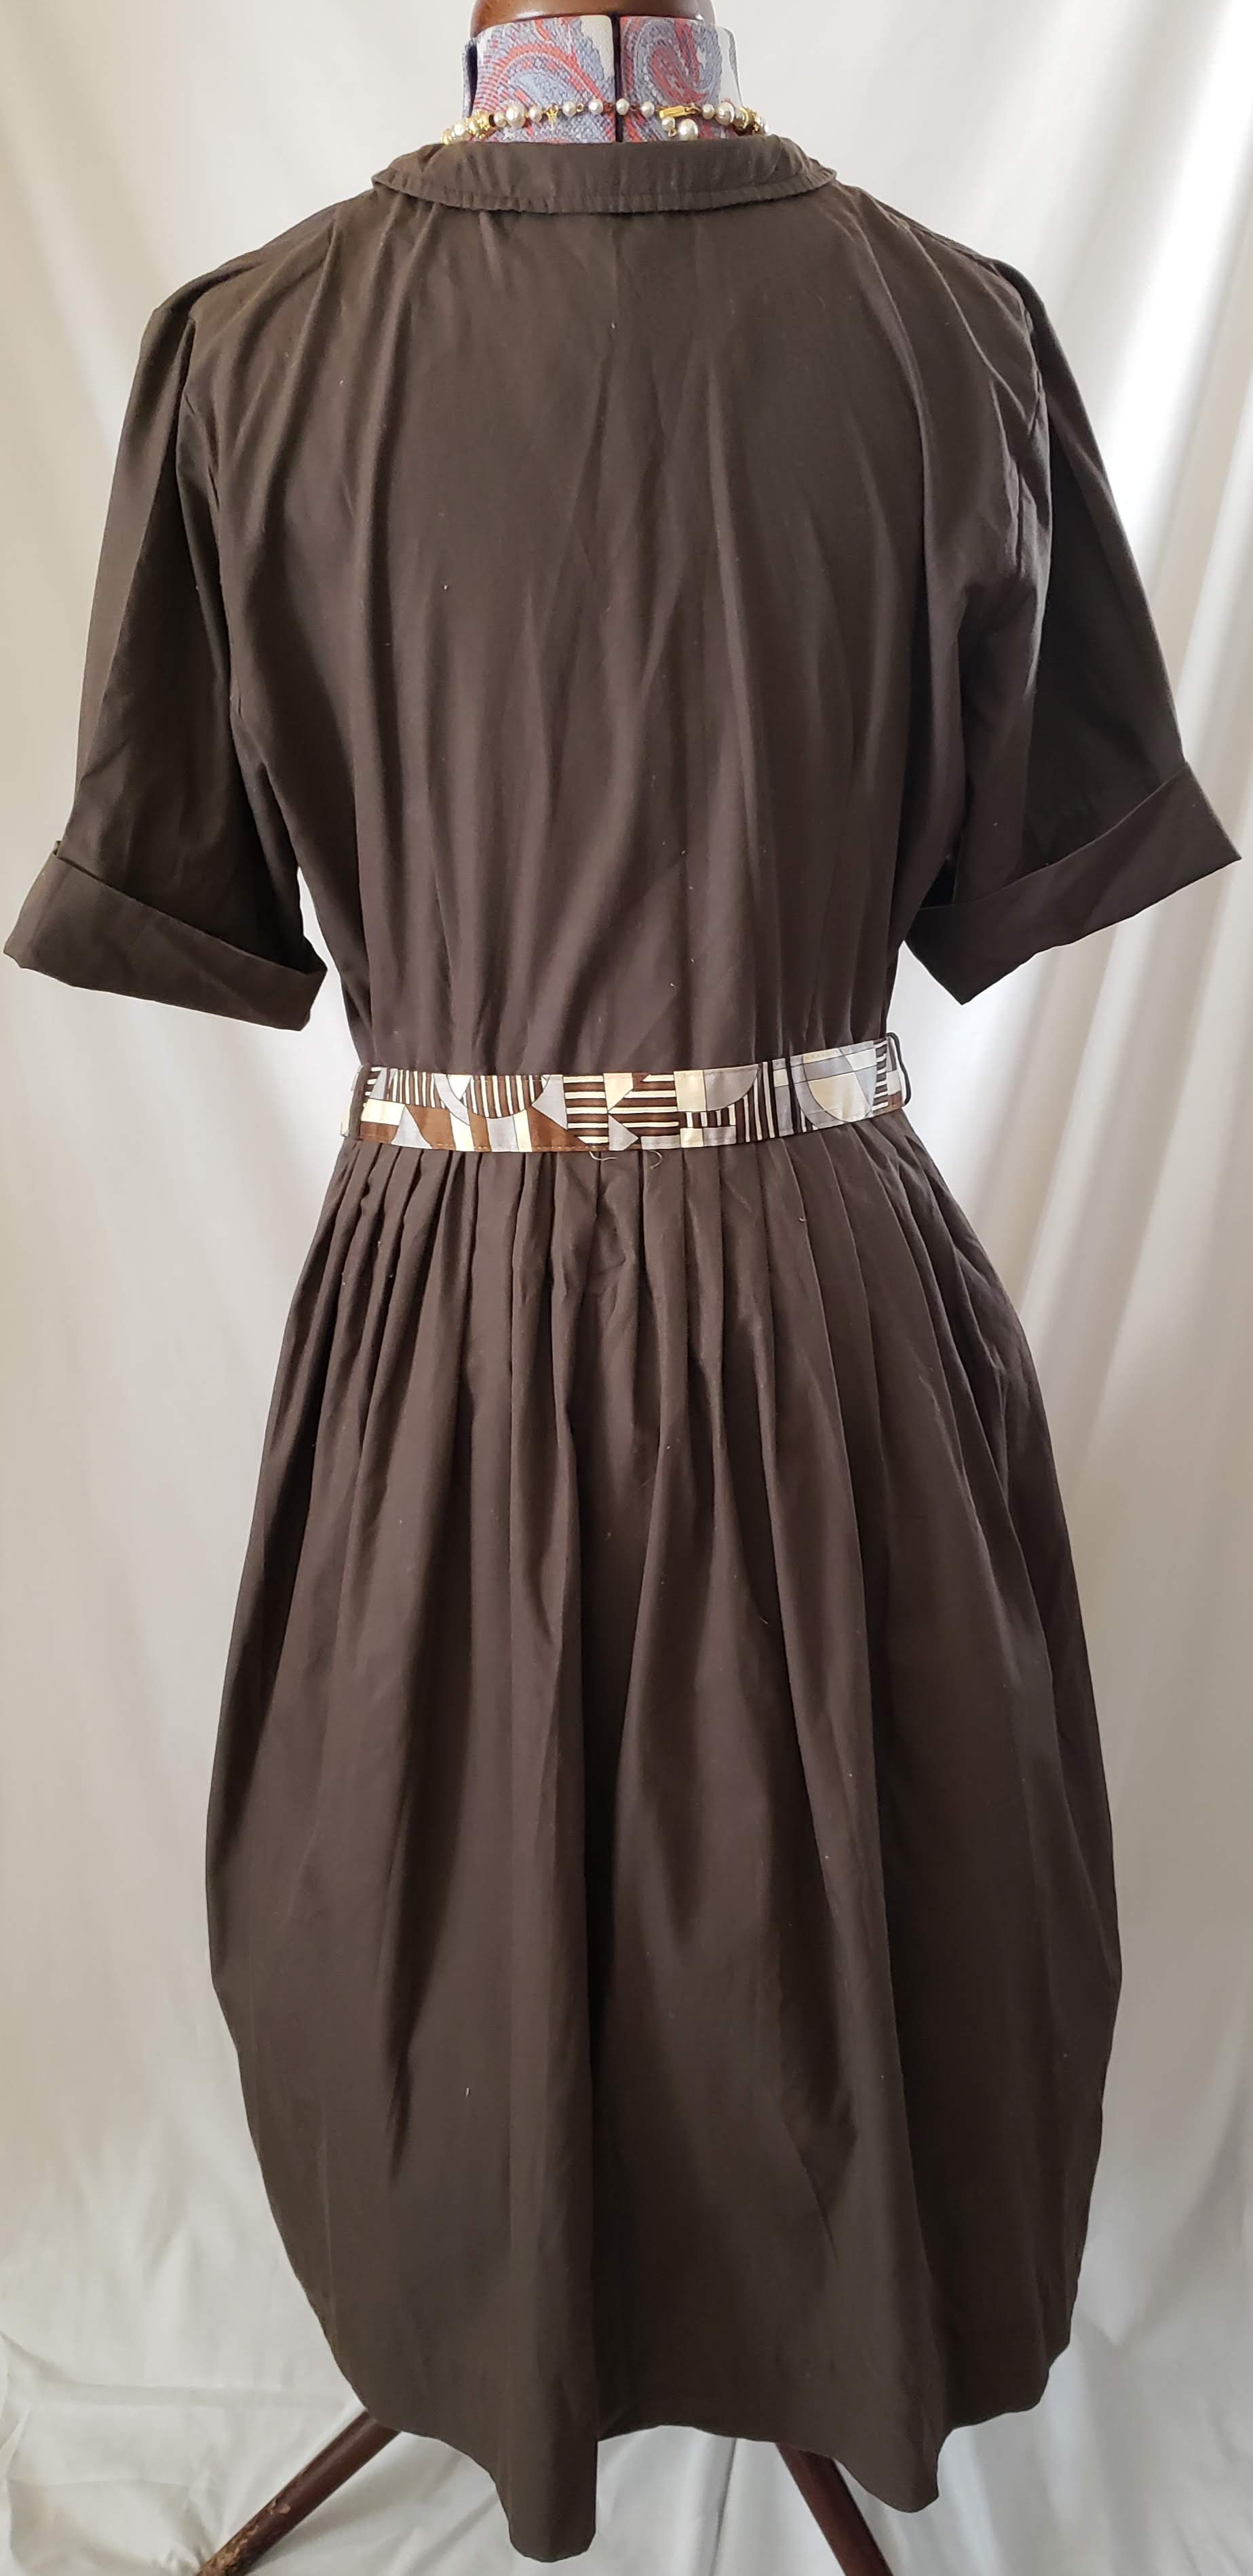 Robe Adele de Sézane  Adele dress, Fashion, Boho chic fashion